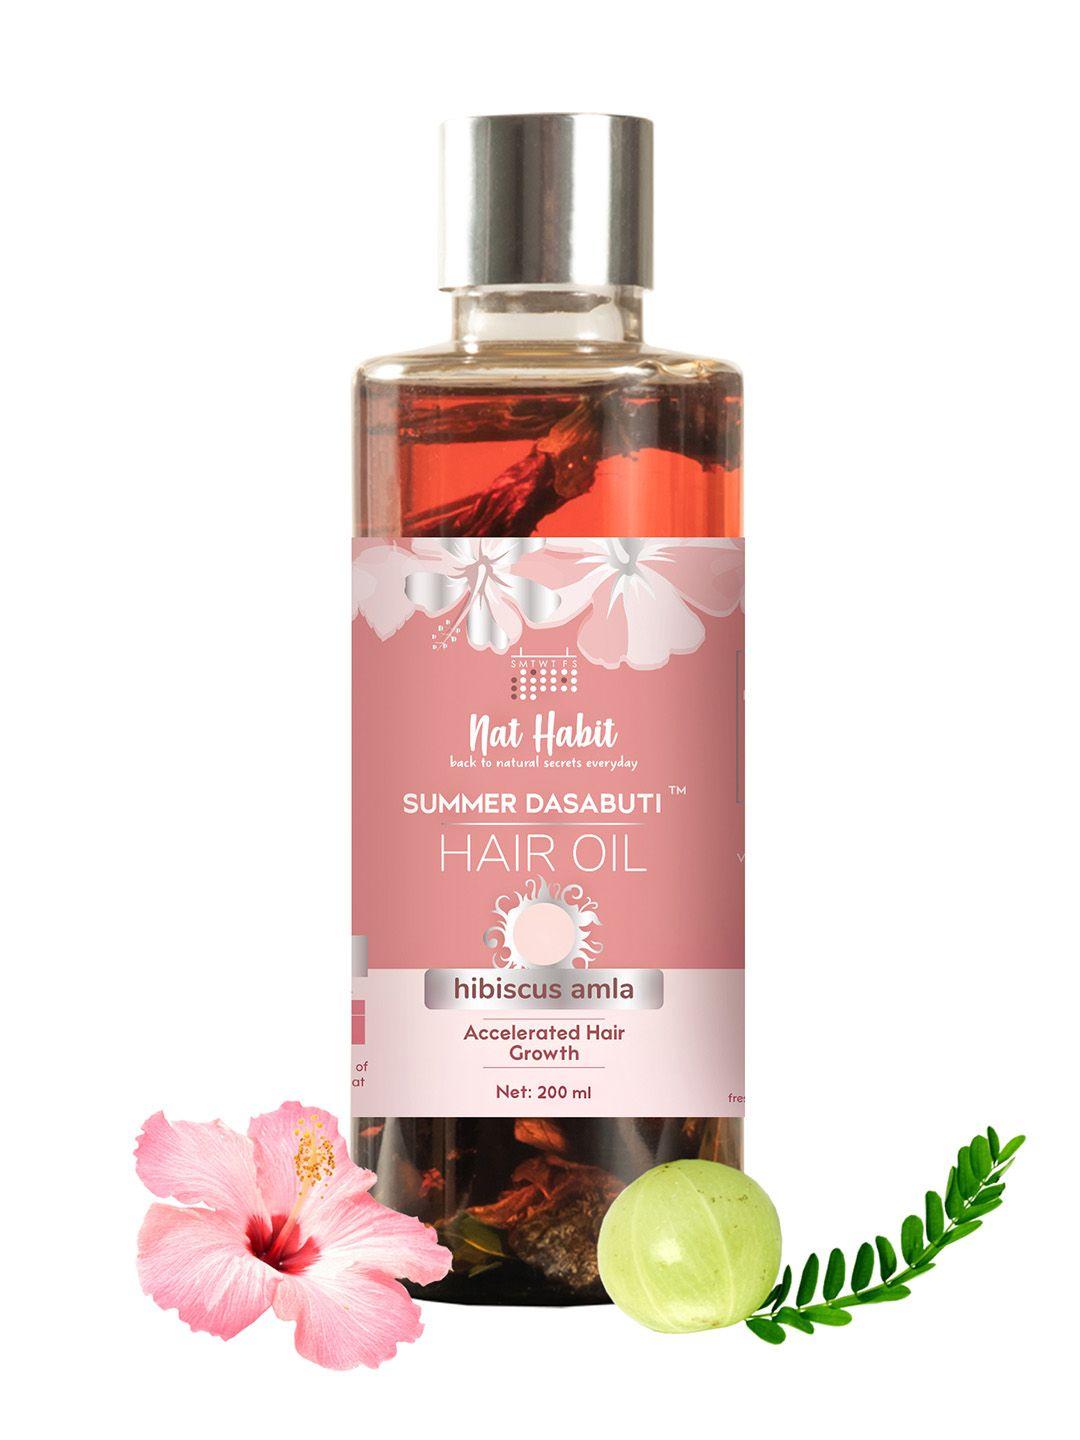 nat habit hibiscus amla summer dasabuti hair oil for accelerated hair growth - 200ml